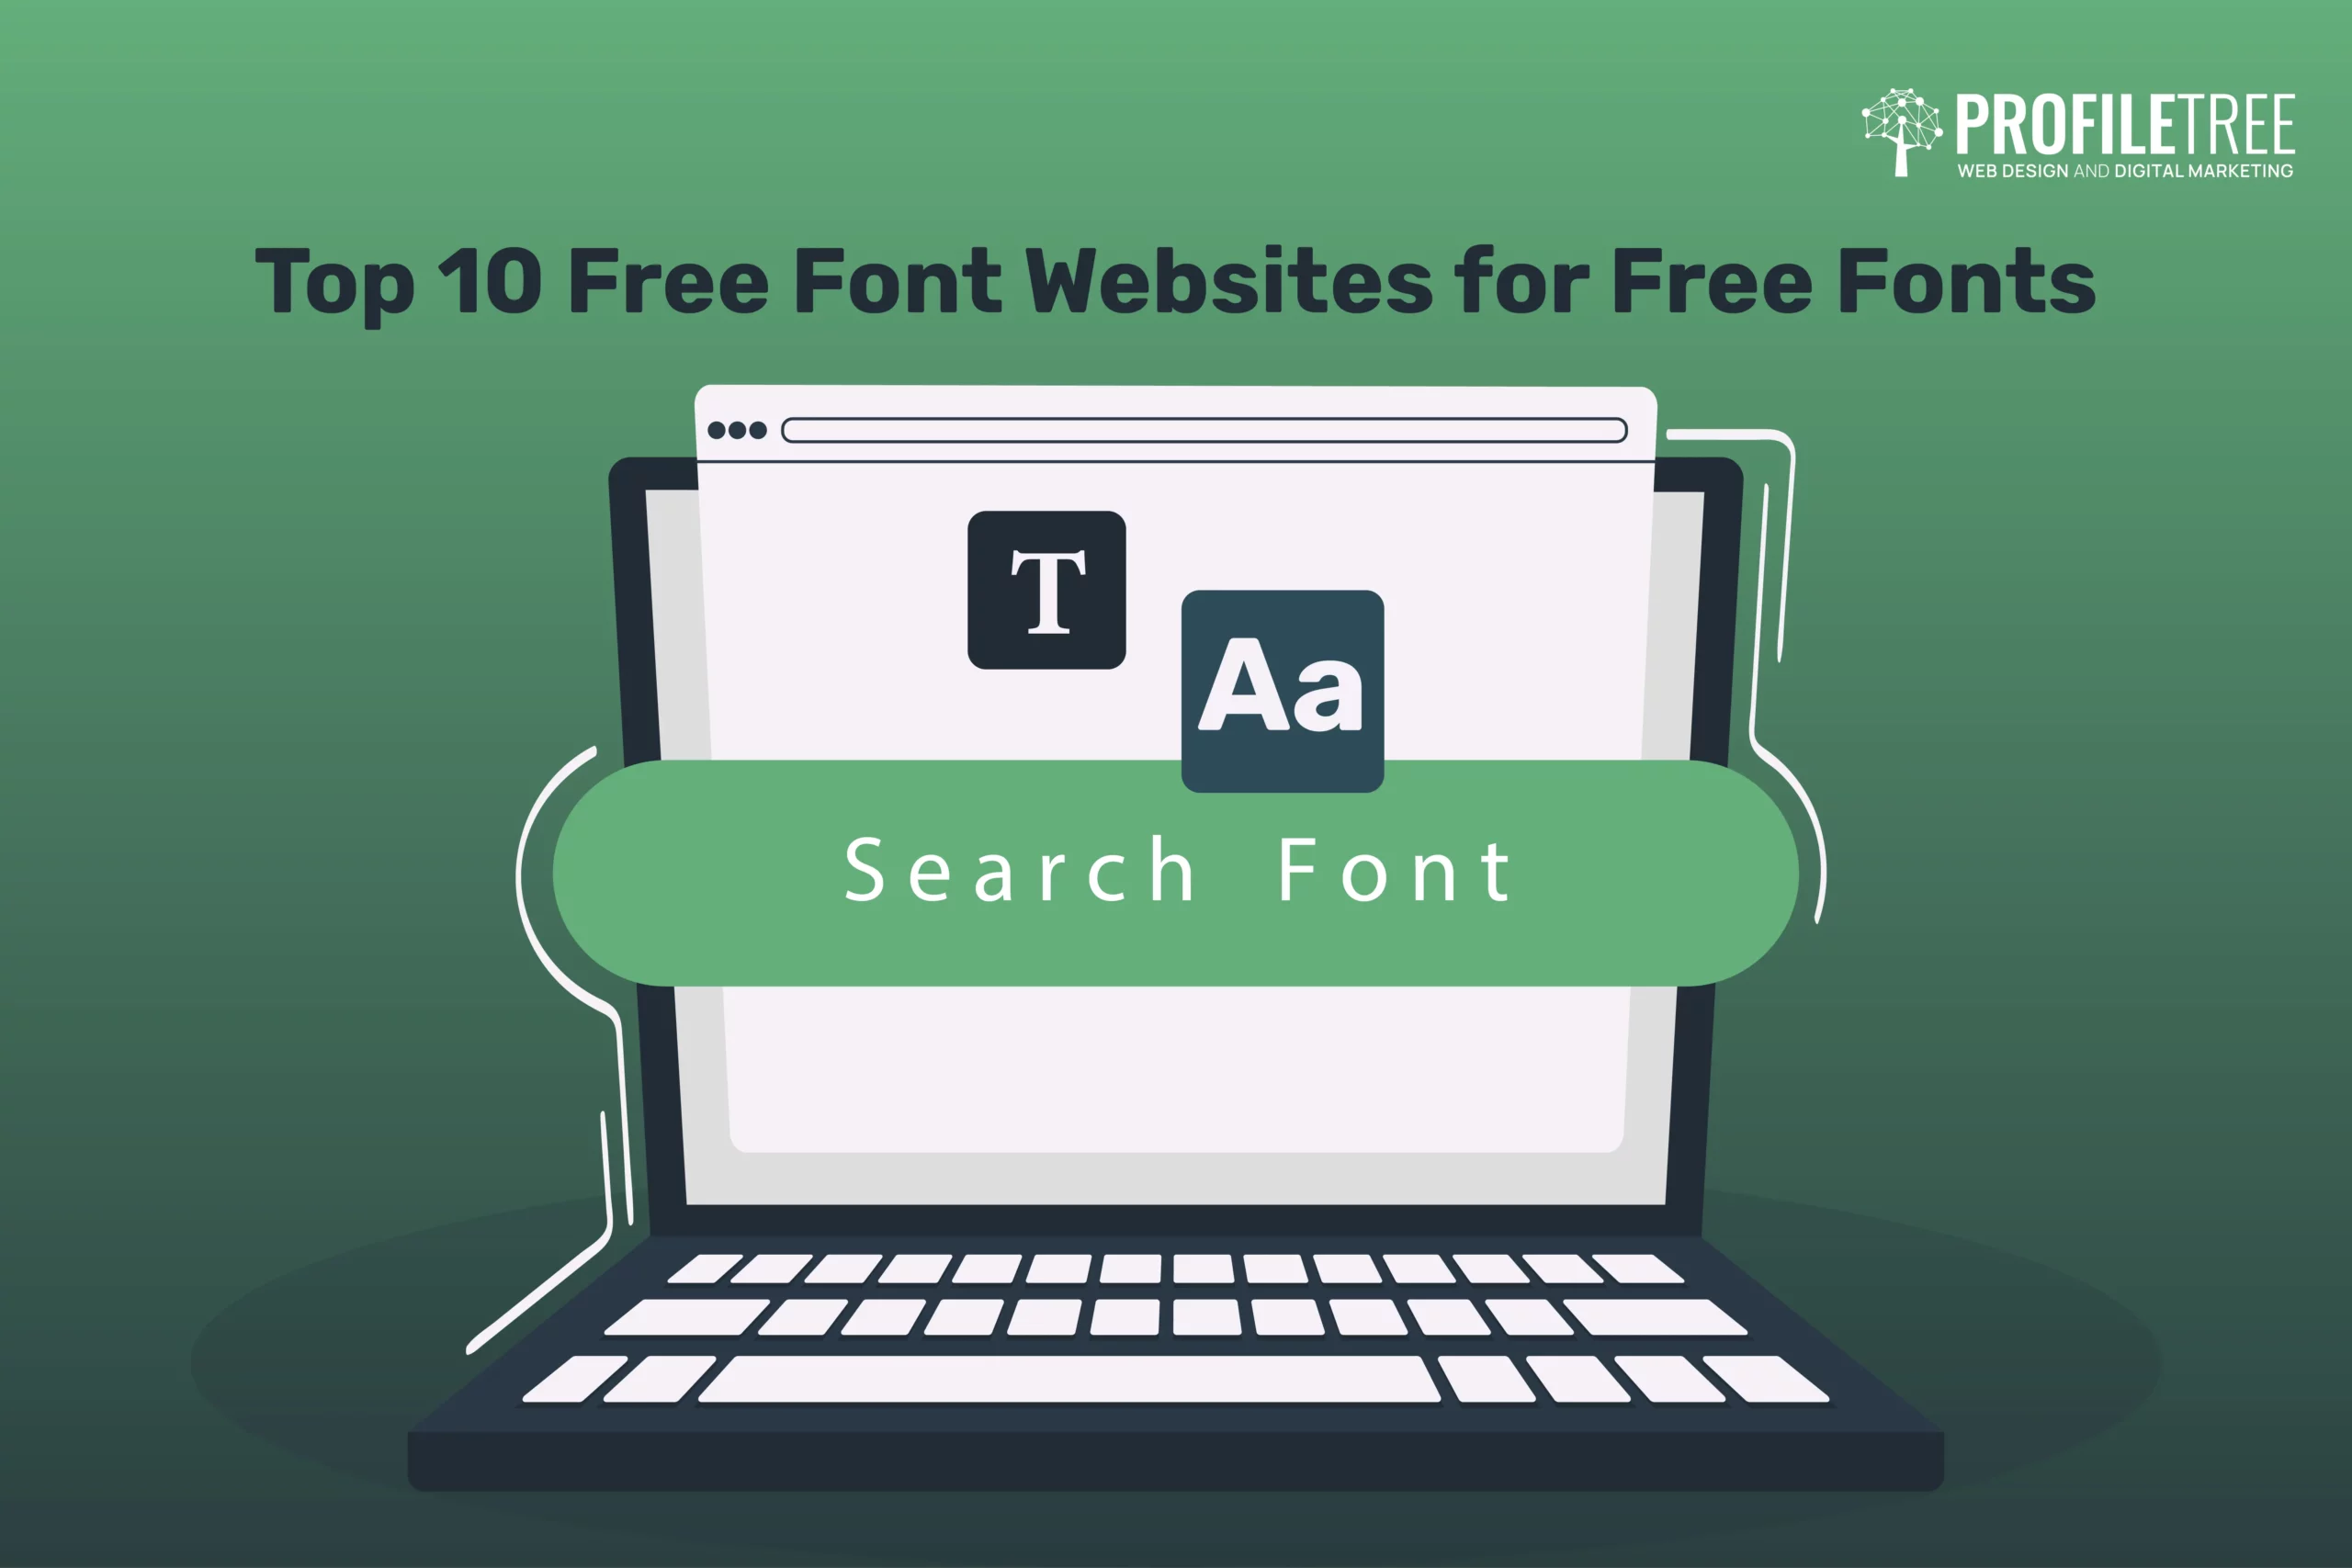 Free fonts - Free Font Websites